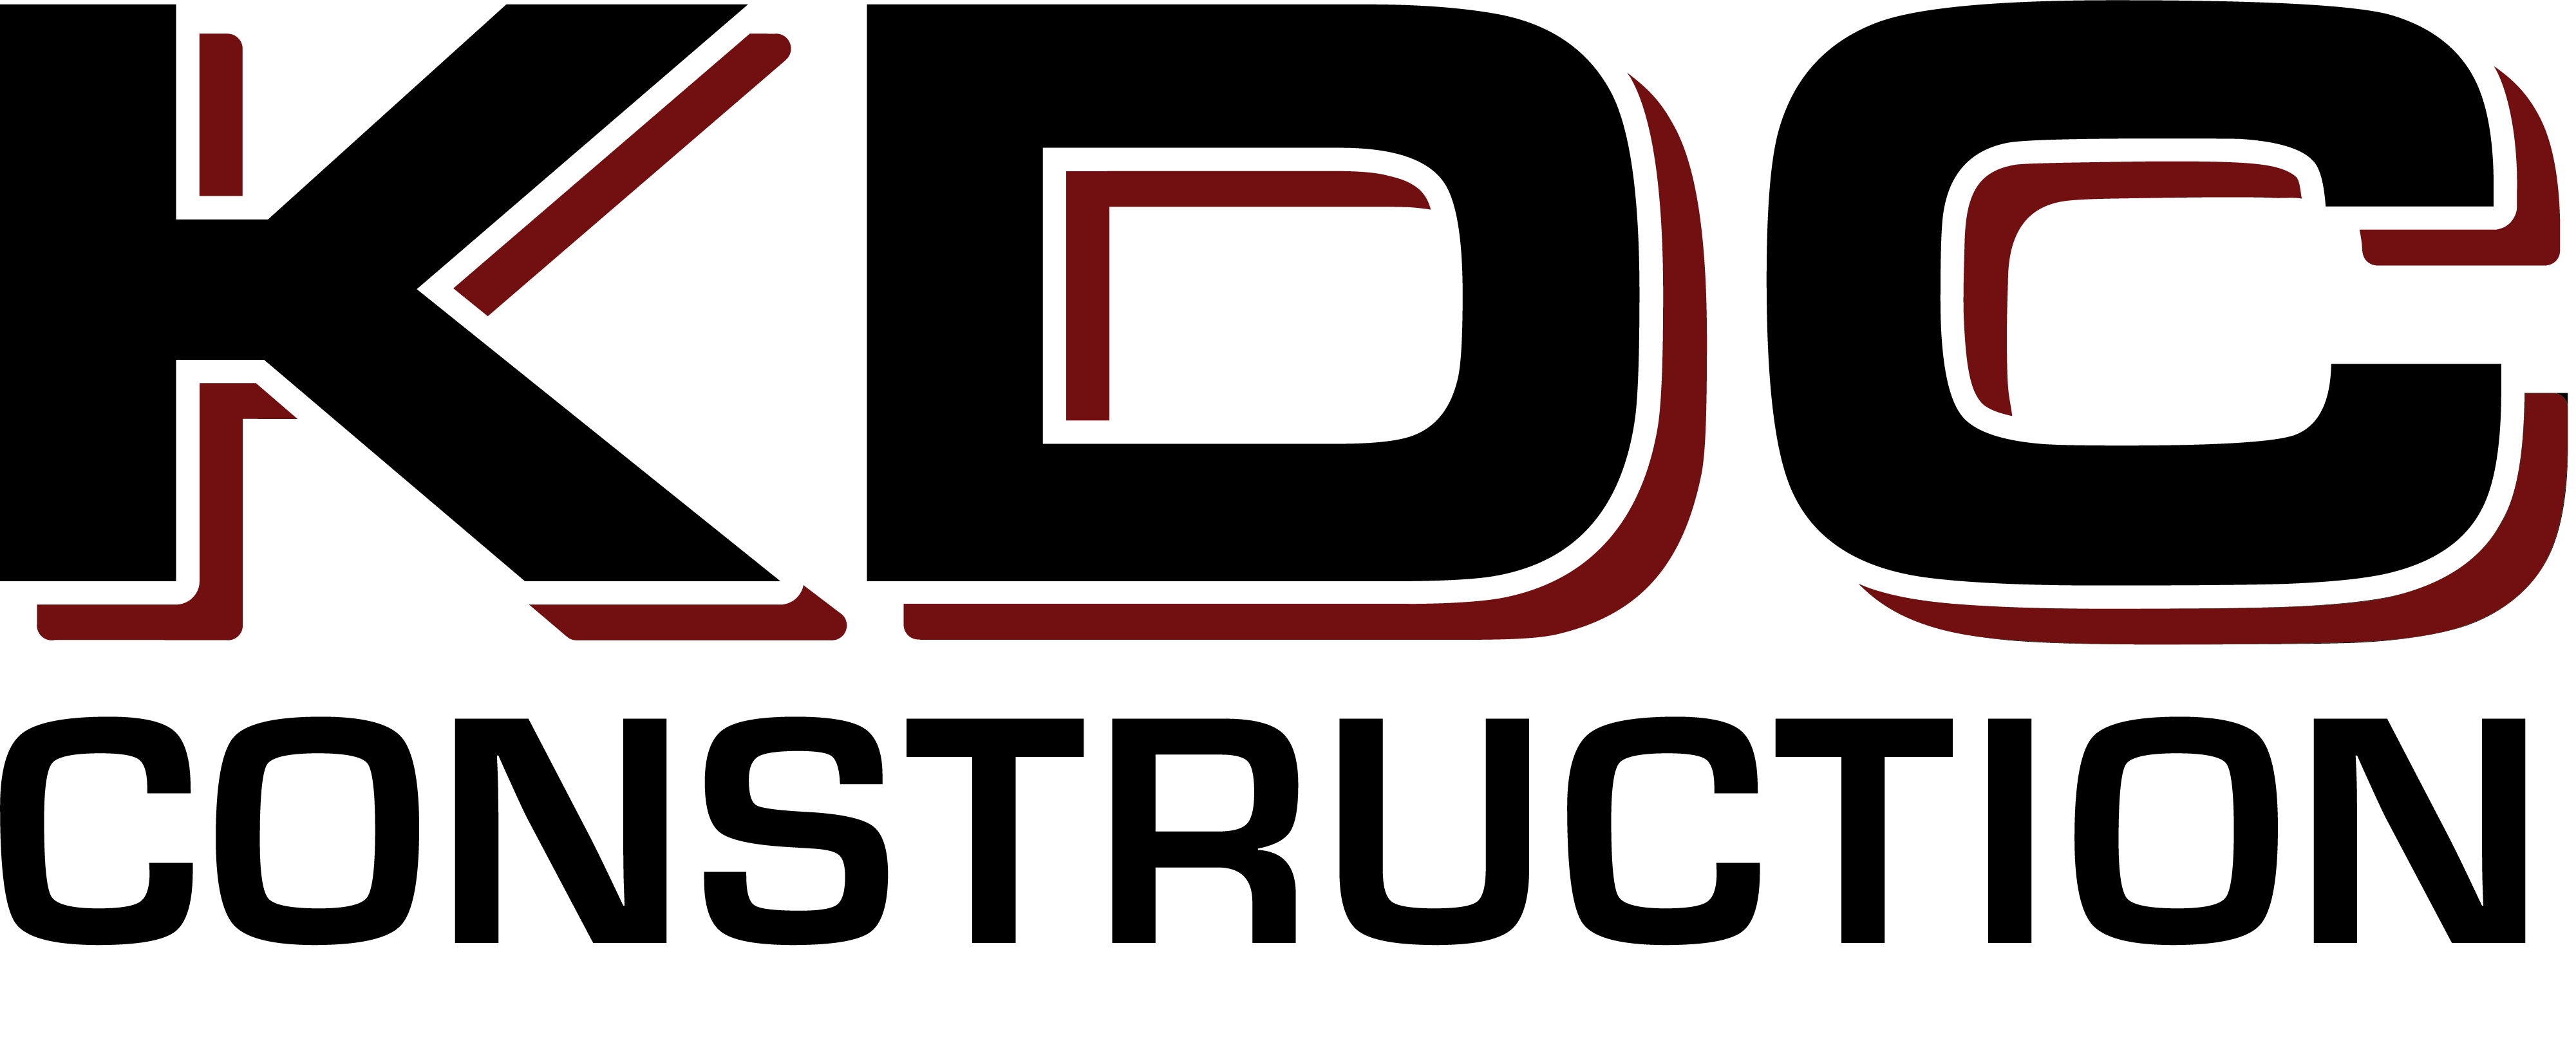 KDC Construction logo